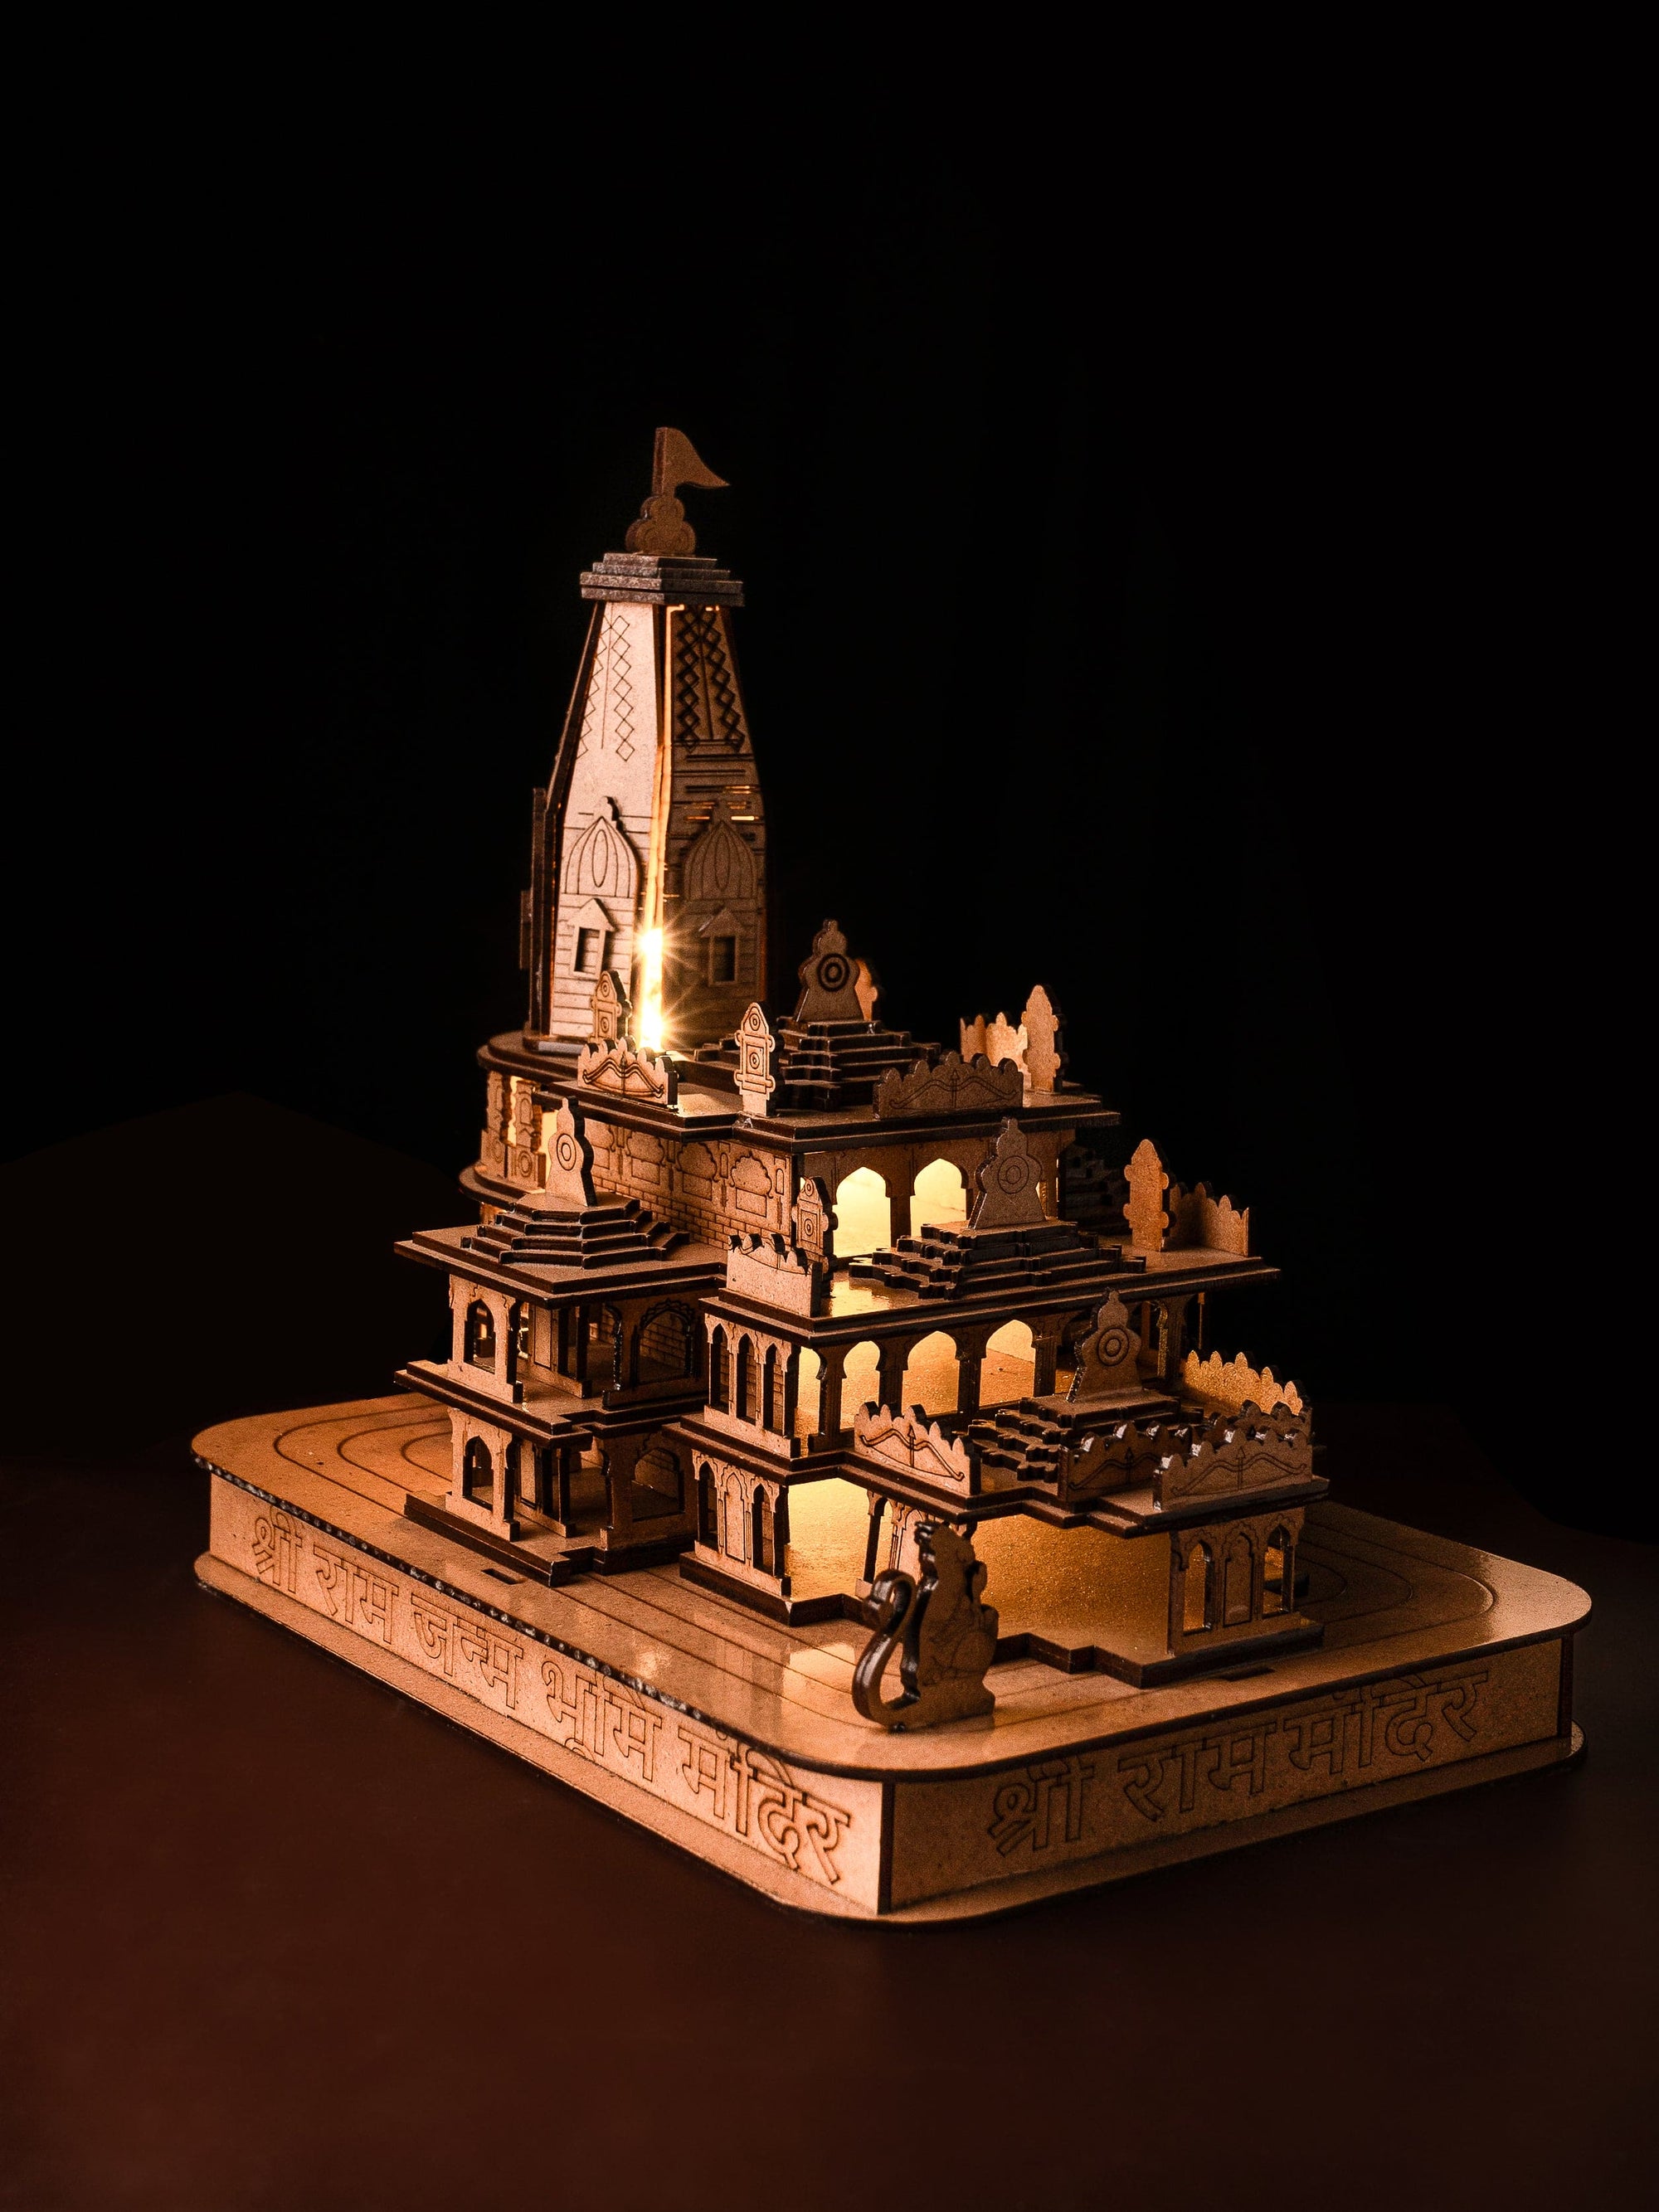 Miniature Replica of Shri Ram Mandir in Ayodhya Decorated with Lights